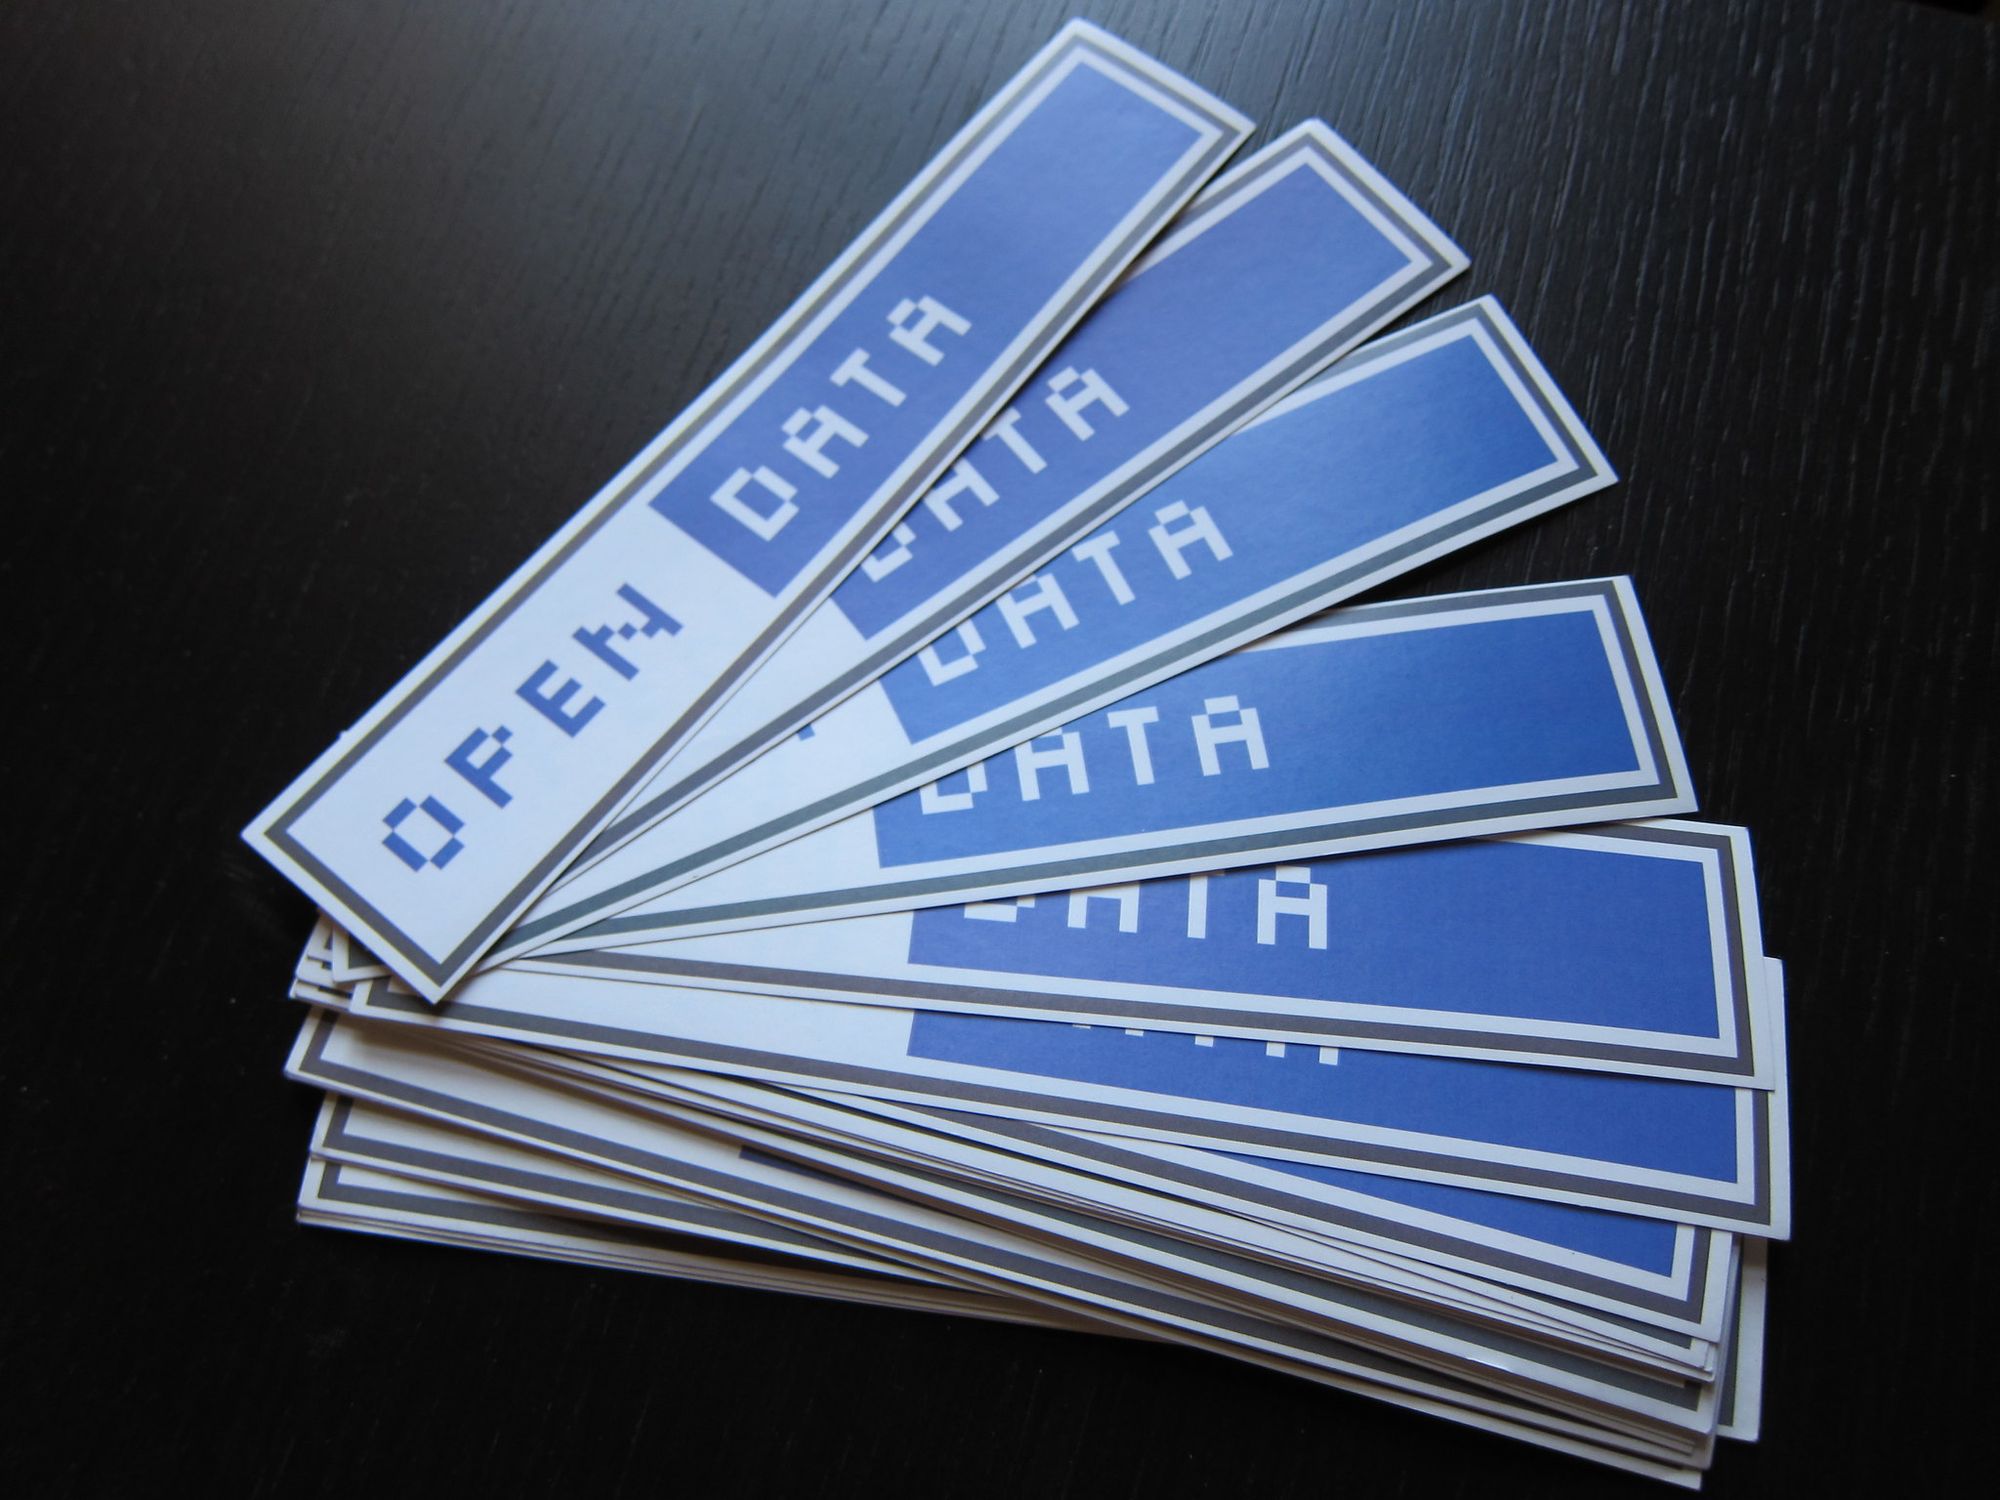 Open Data stickers